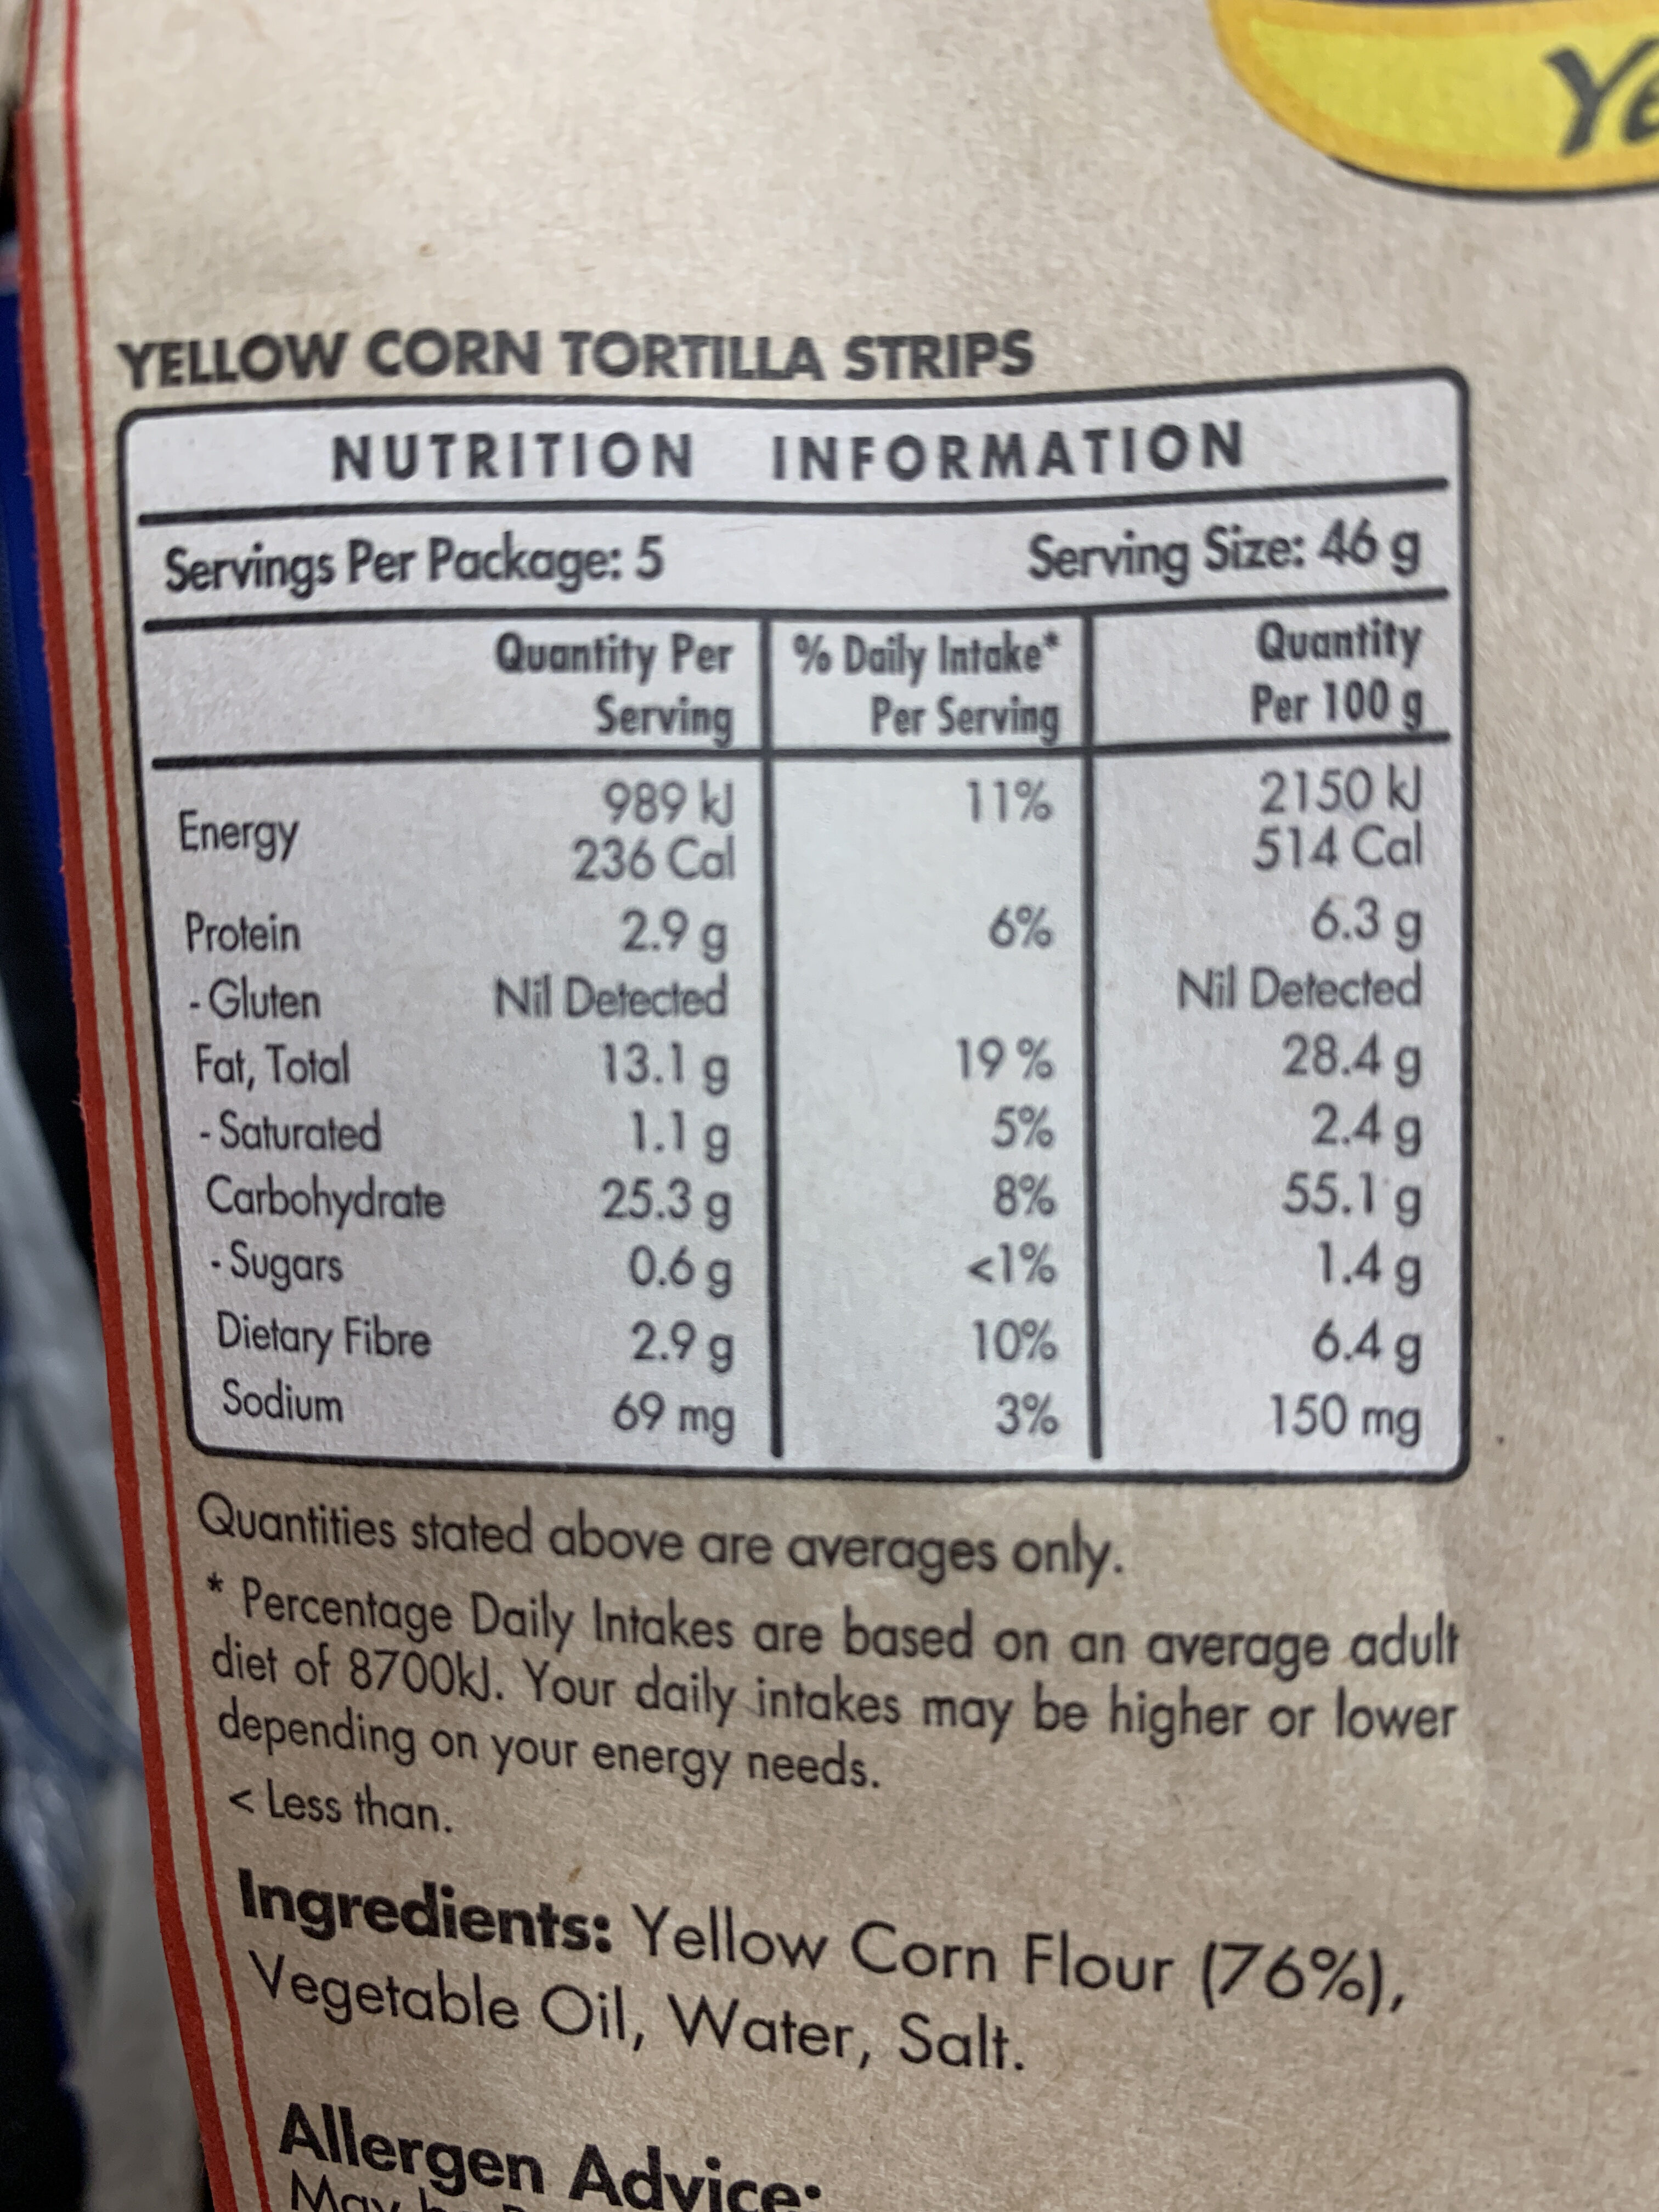 Mission original tortilla strips yellow corn - Nutrition facts